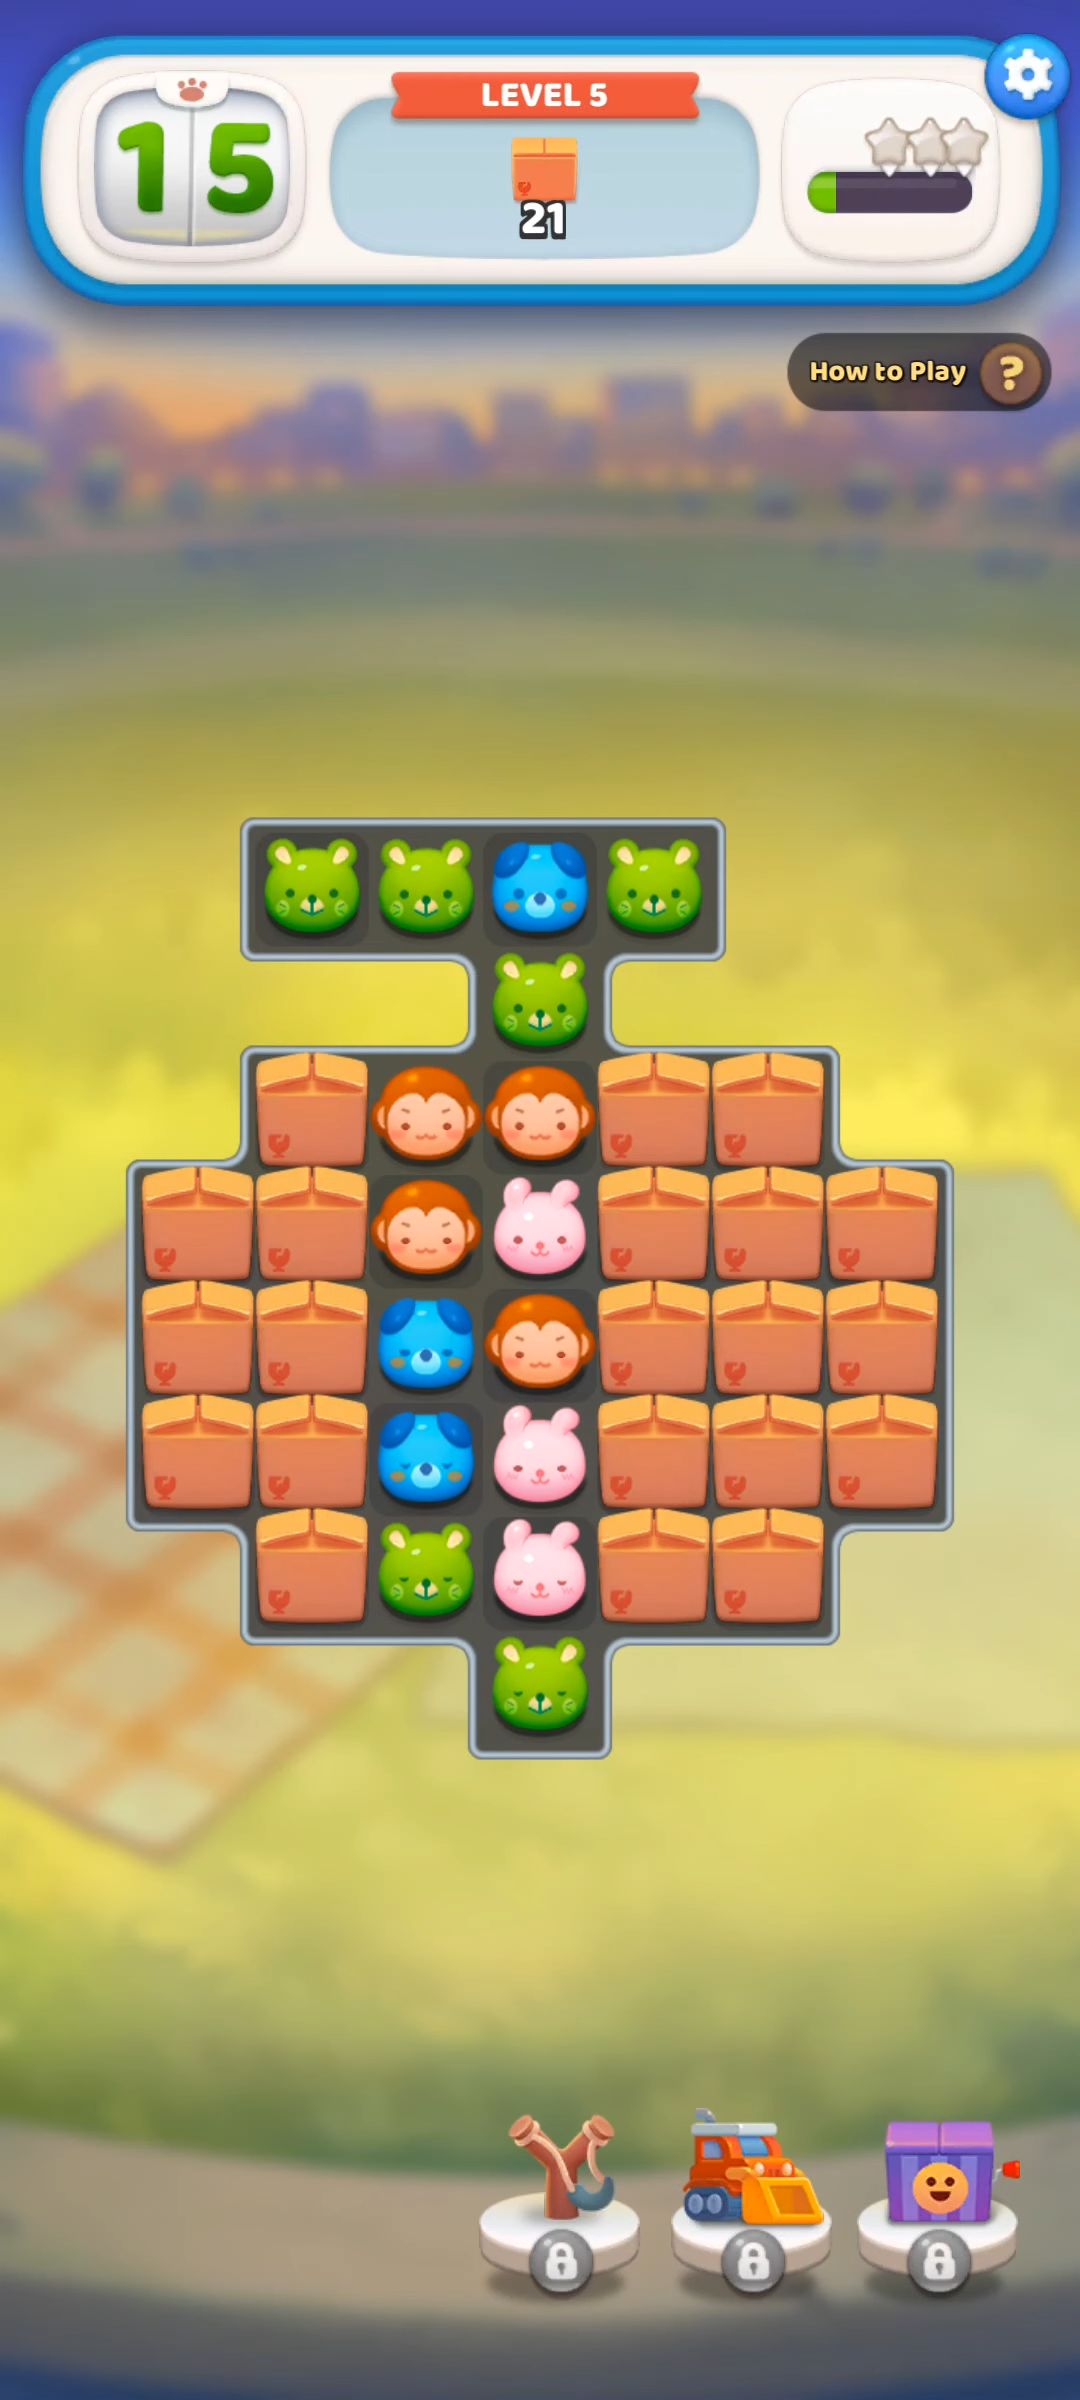 Anipang Match - Android game screenshots.